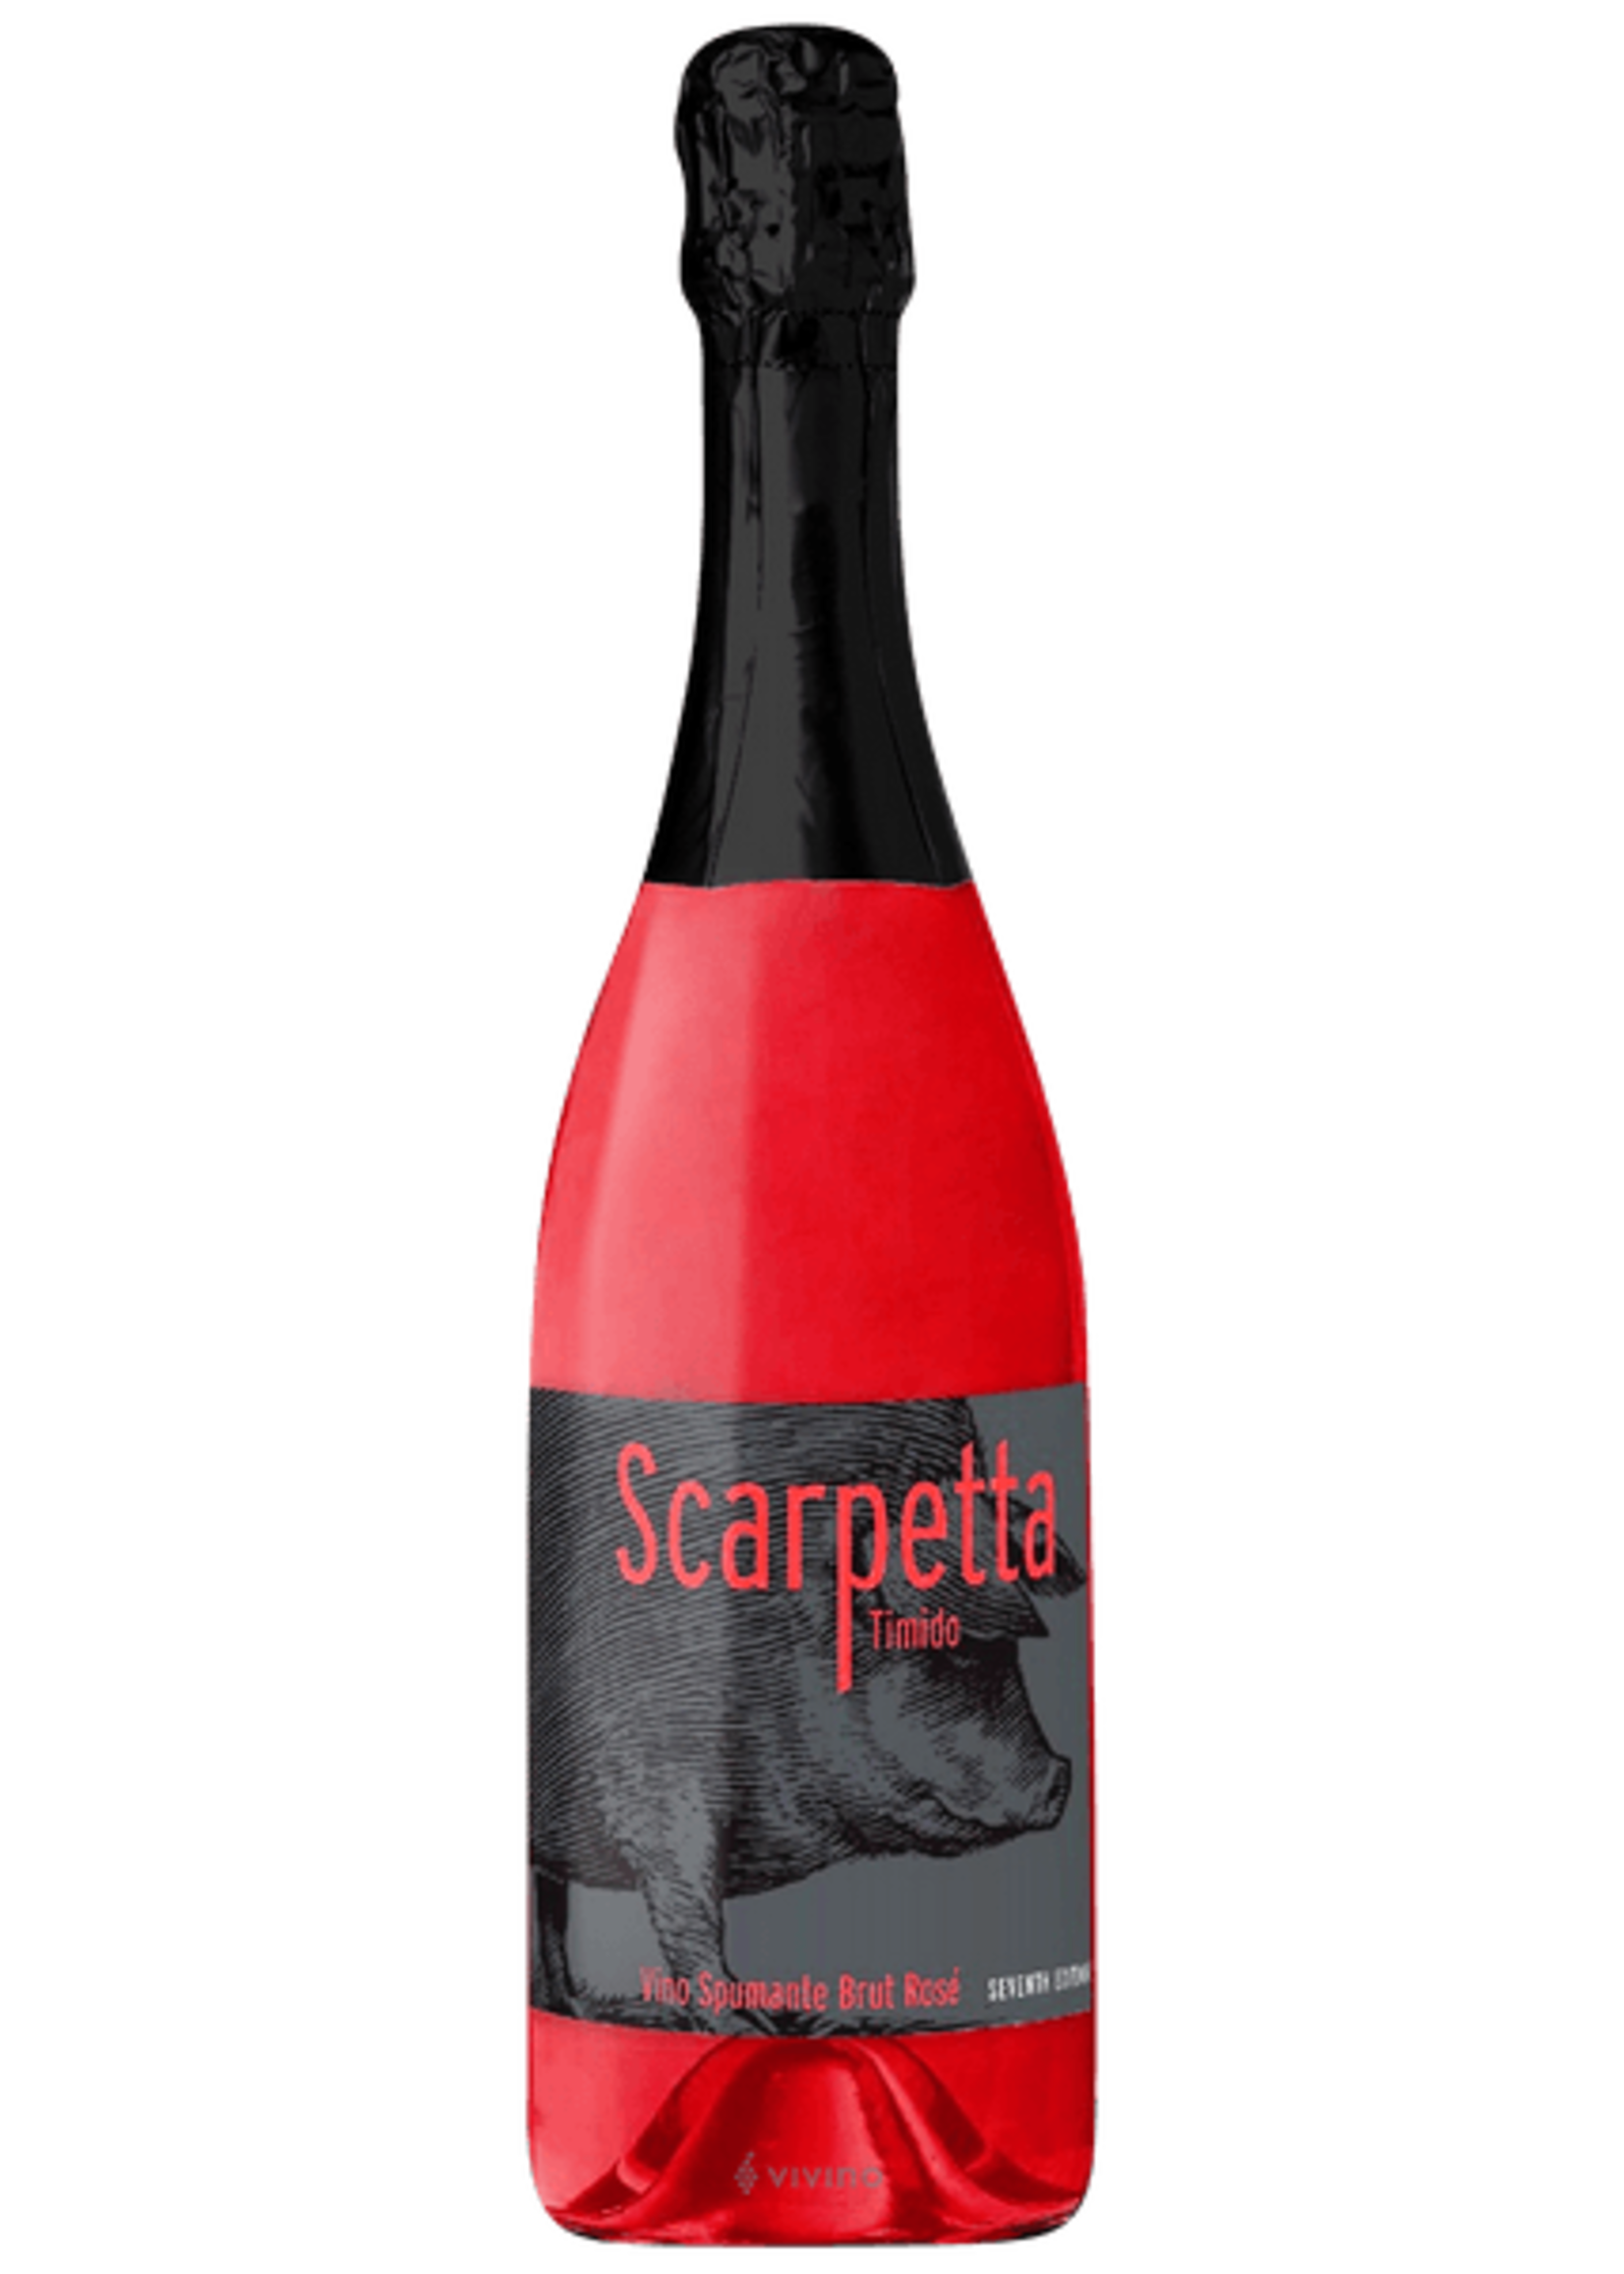 Scarpetta Scarpetta / Timido Spumante Brut Rose / 750mL